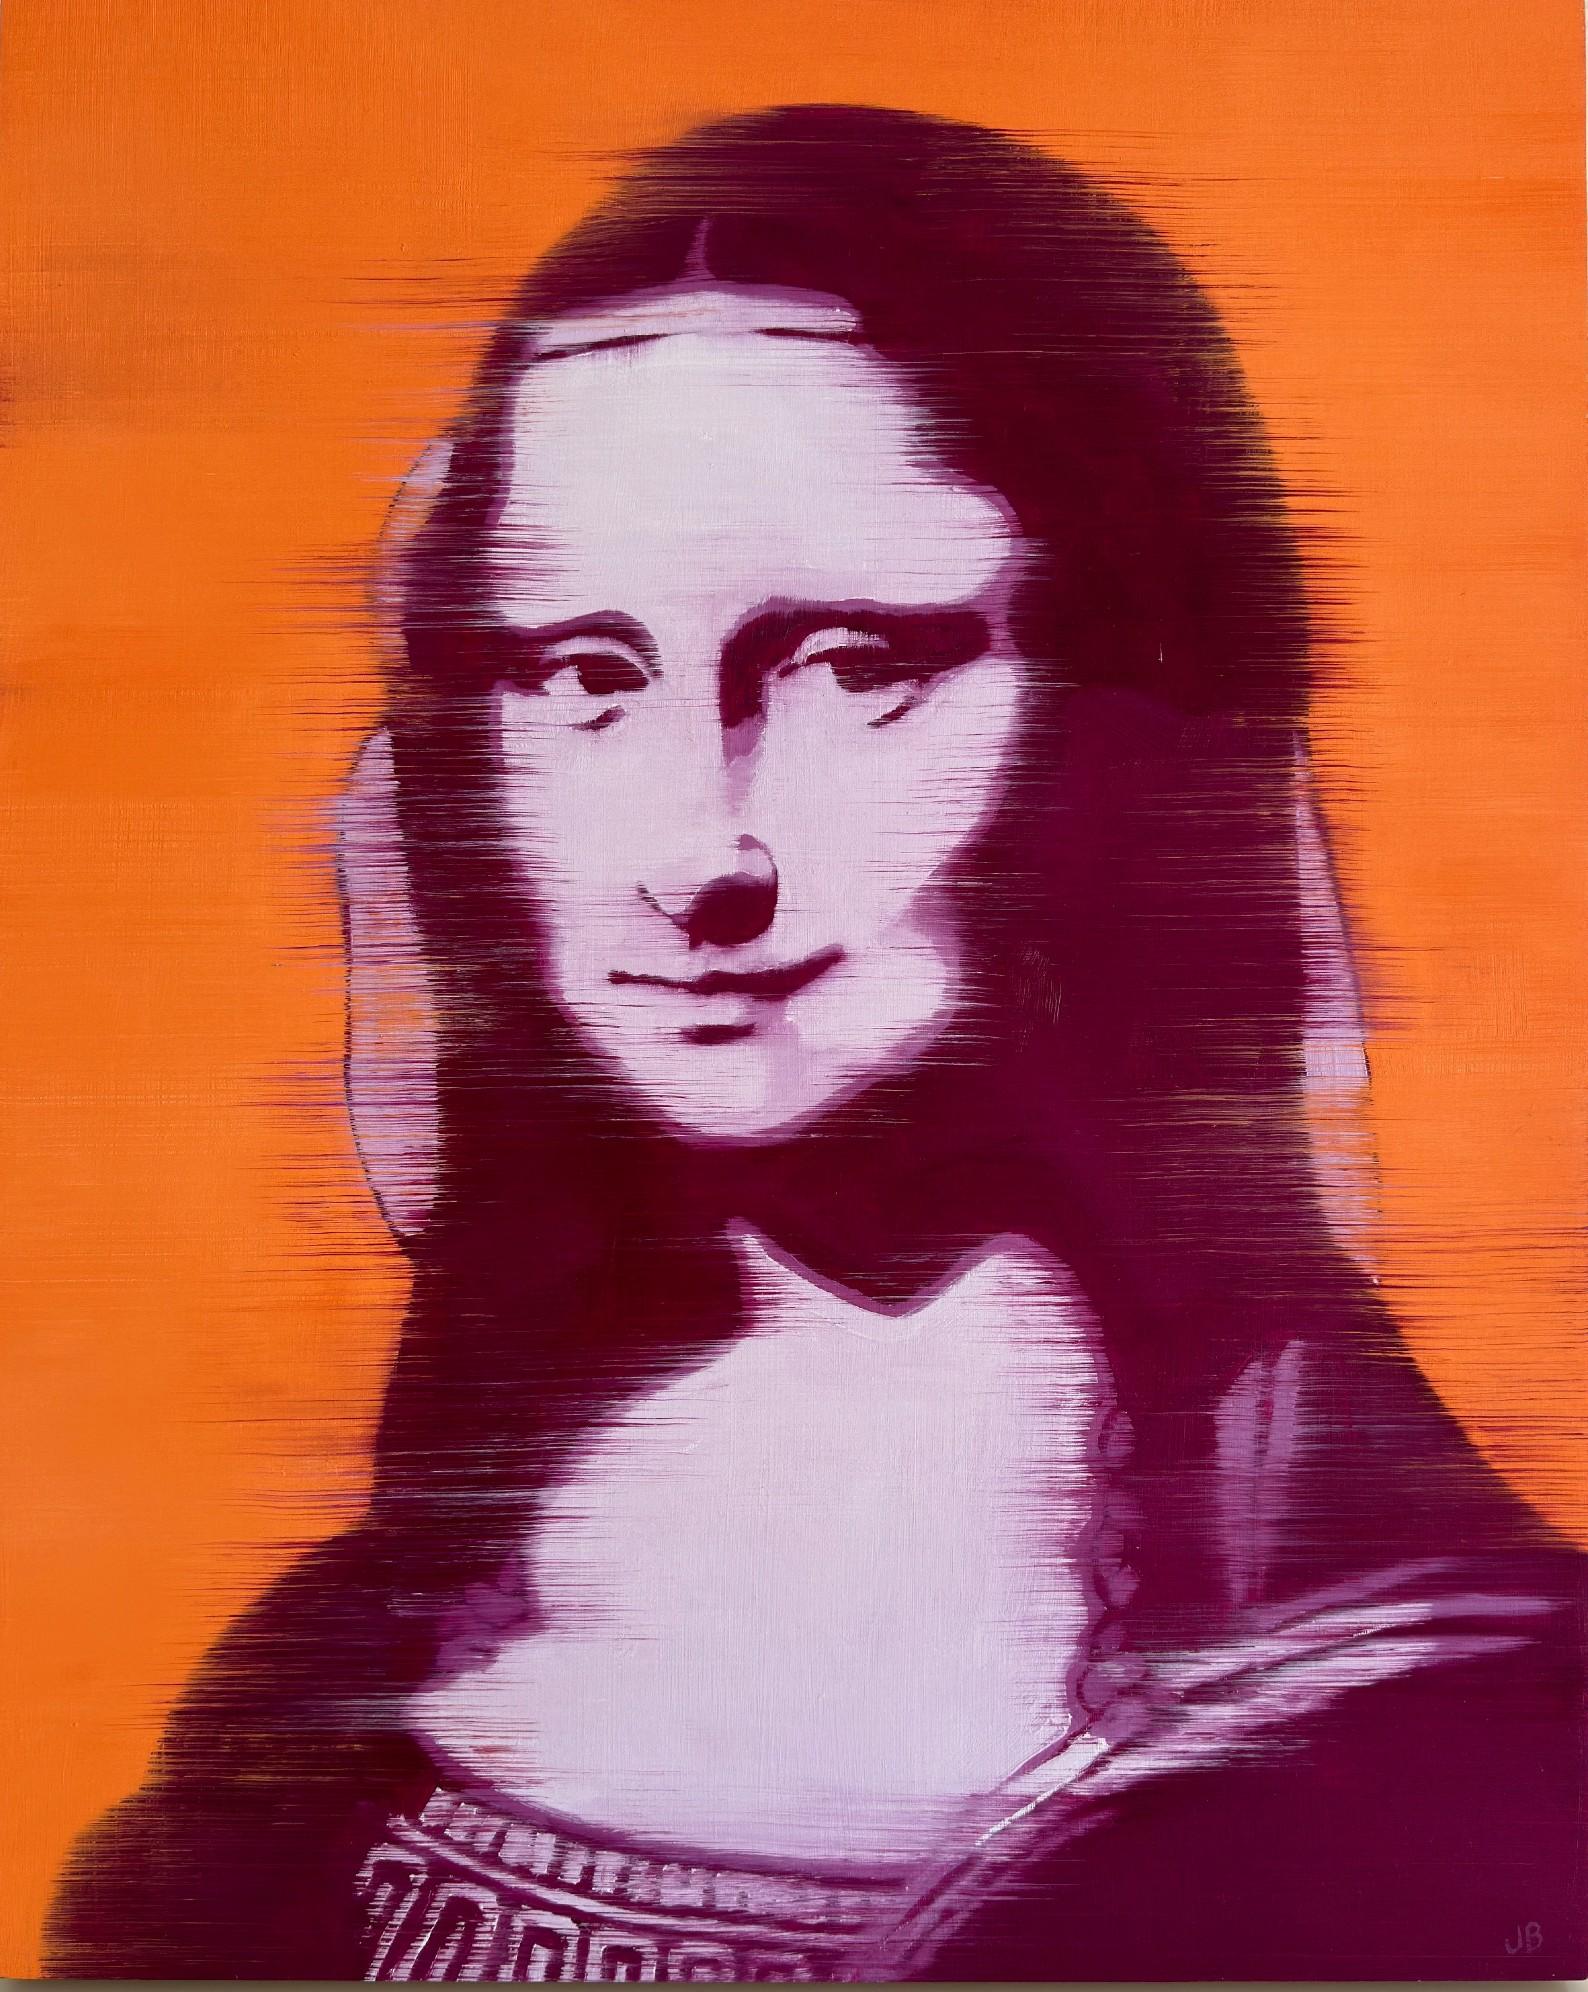 Joan Breckwoldt Portrait Painting - Mona Lisa Orange and Purple  20" x 16 " Oil on Birch Panel  Unique  Iconic Style